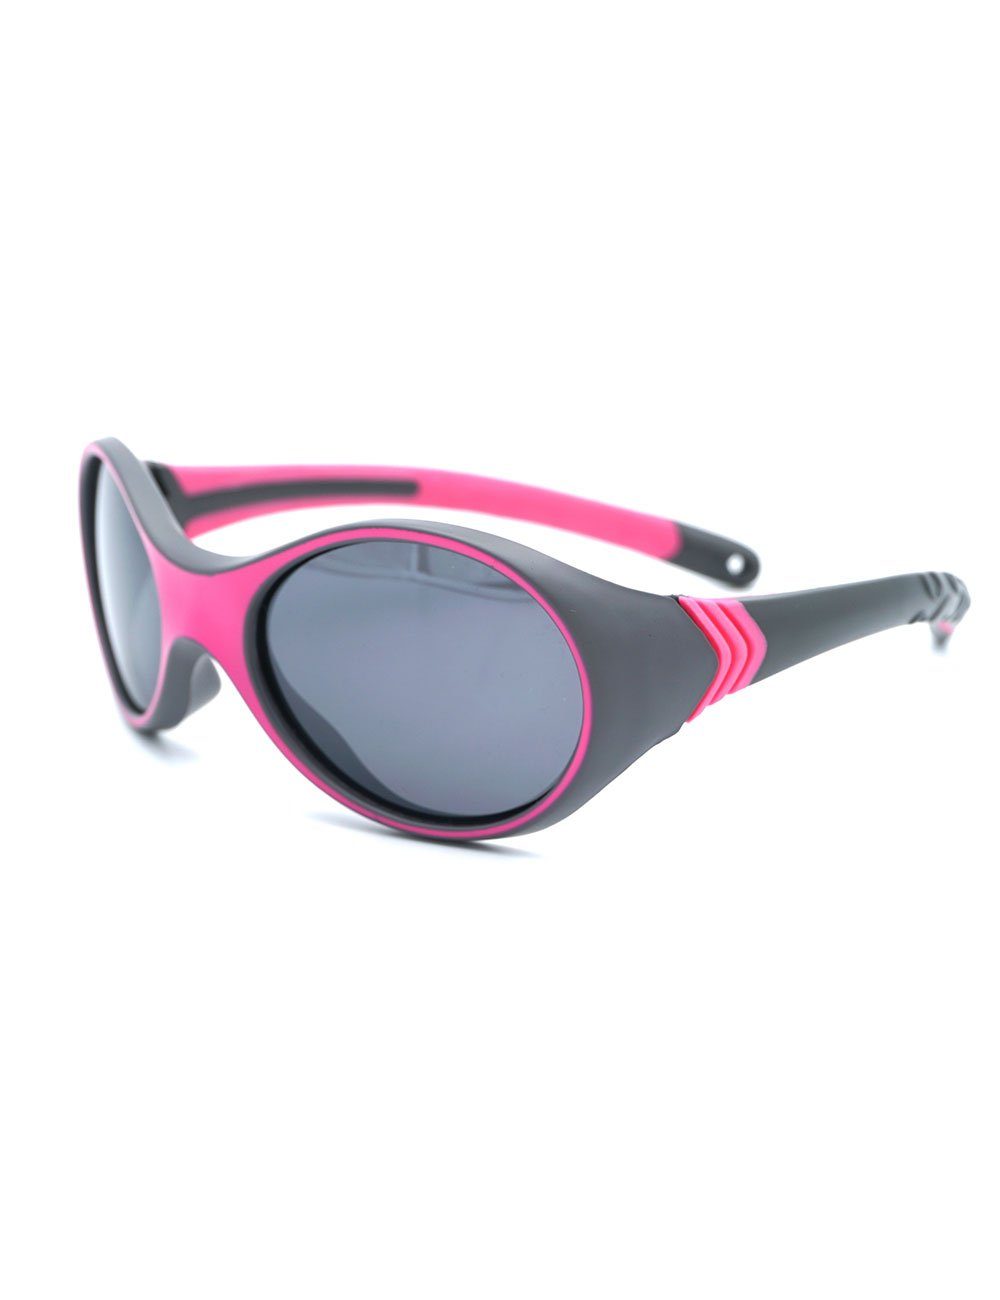 MAXIMO KIDS-Sonnenbrille grey inkl.Box,Microfaserb. 'sporty' Sonnenbrille pink/dark